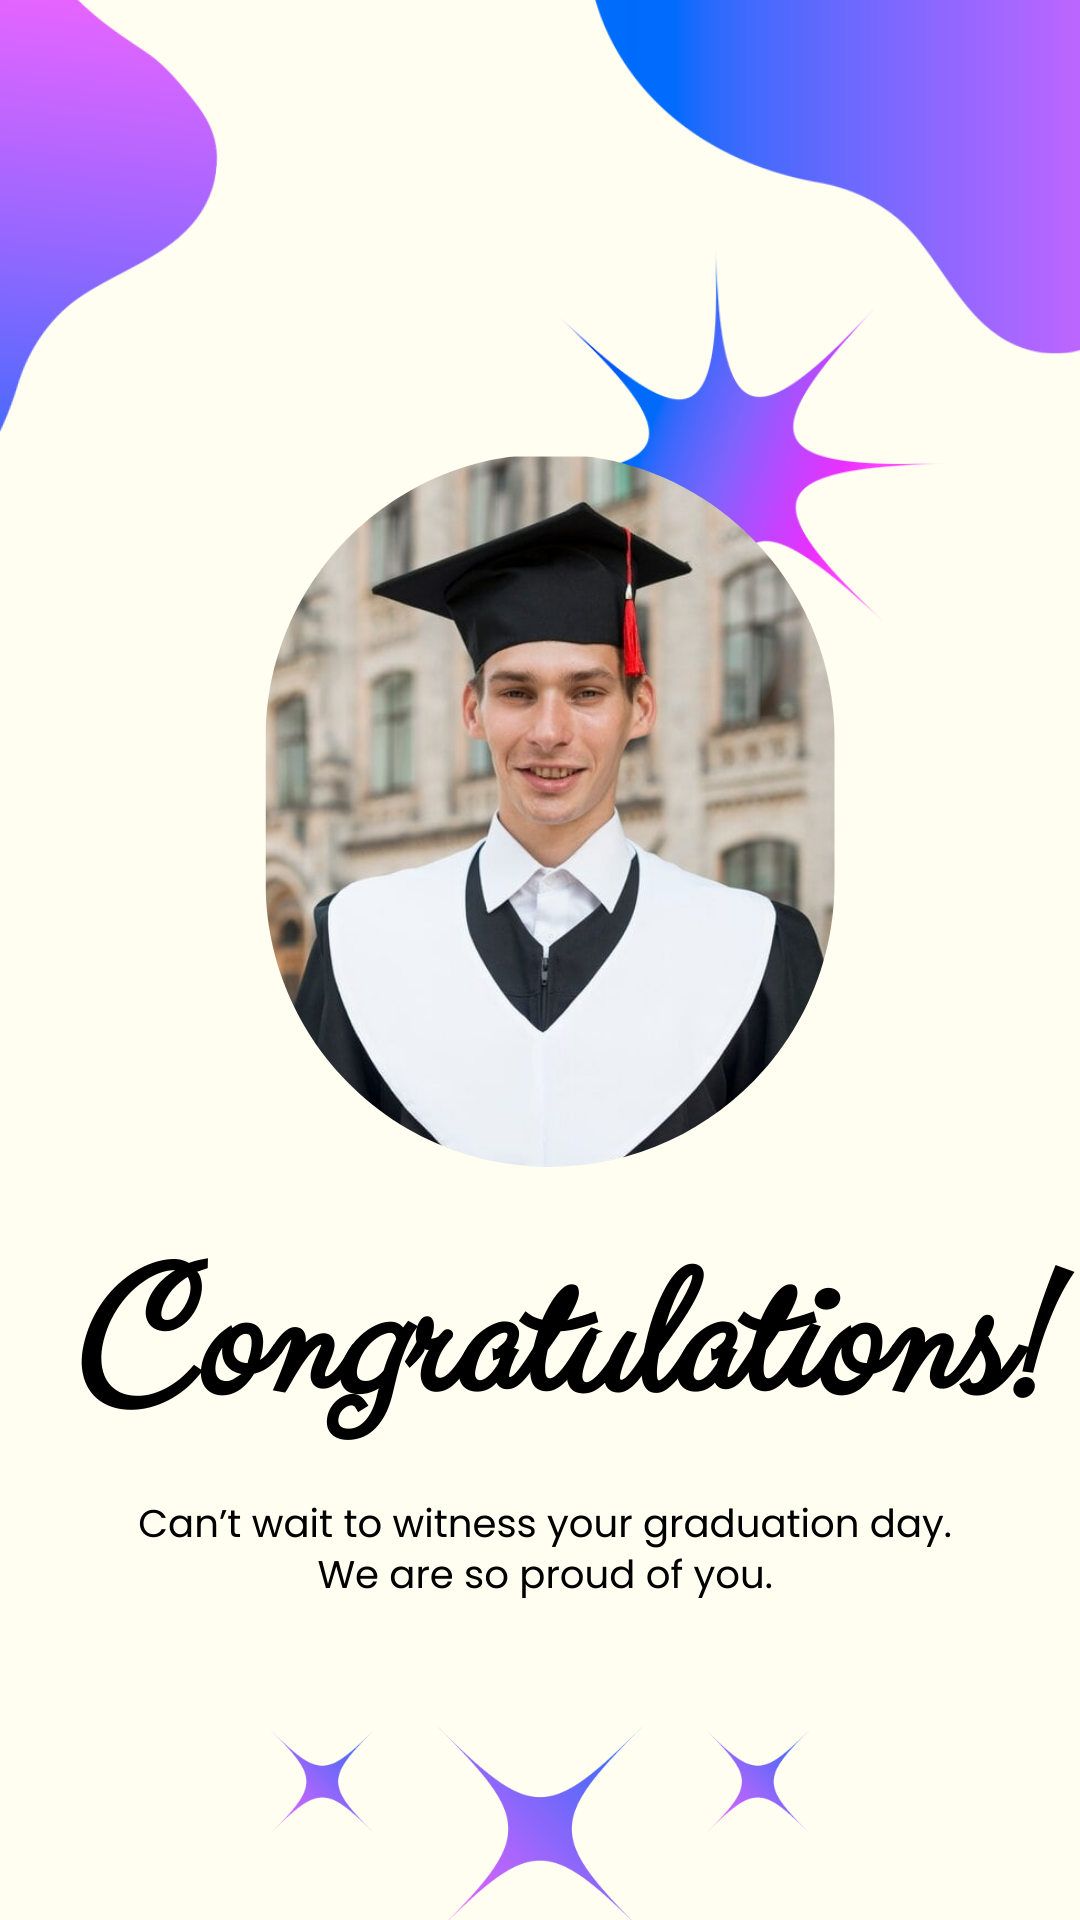 Congratulations Graduation Ceremony Instagram Post